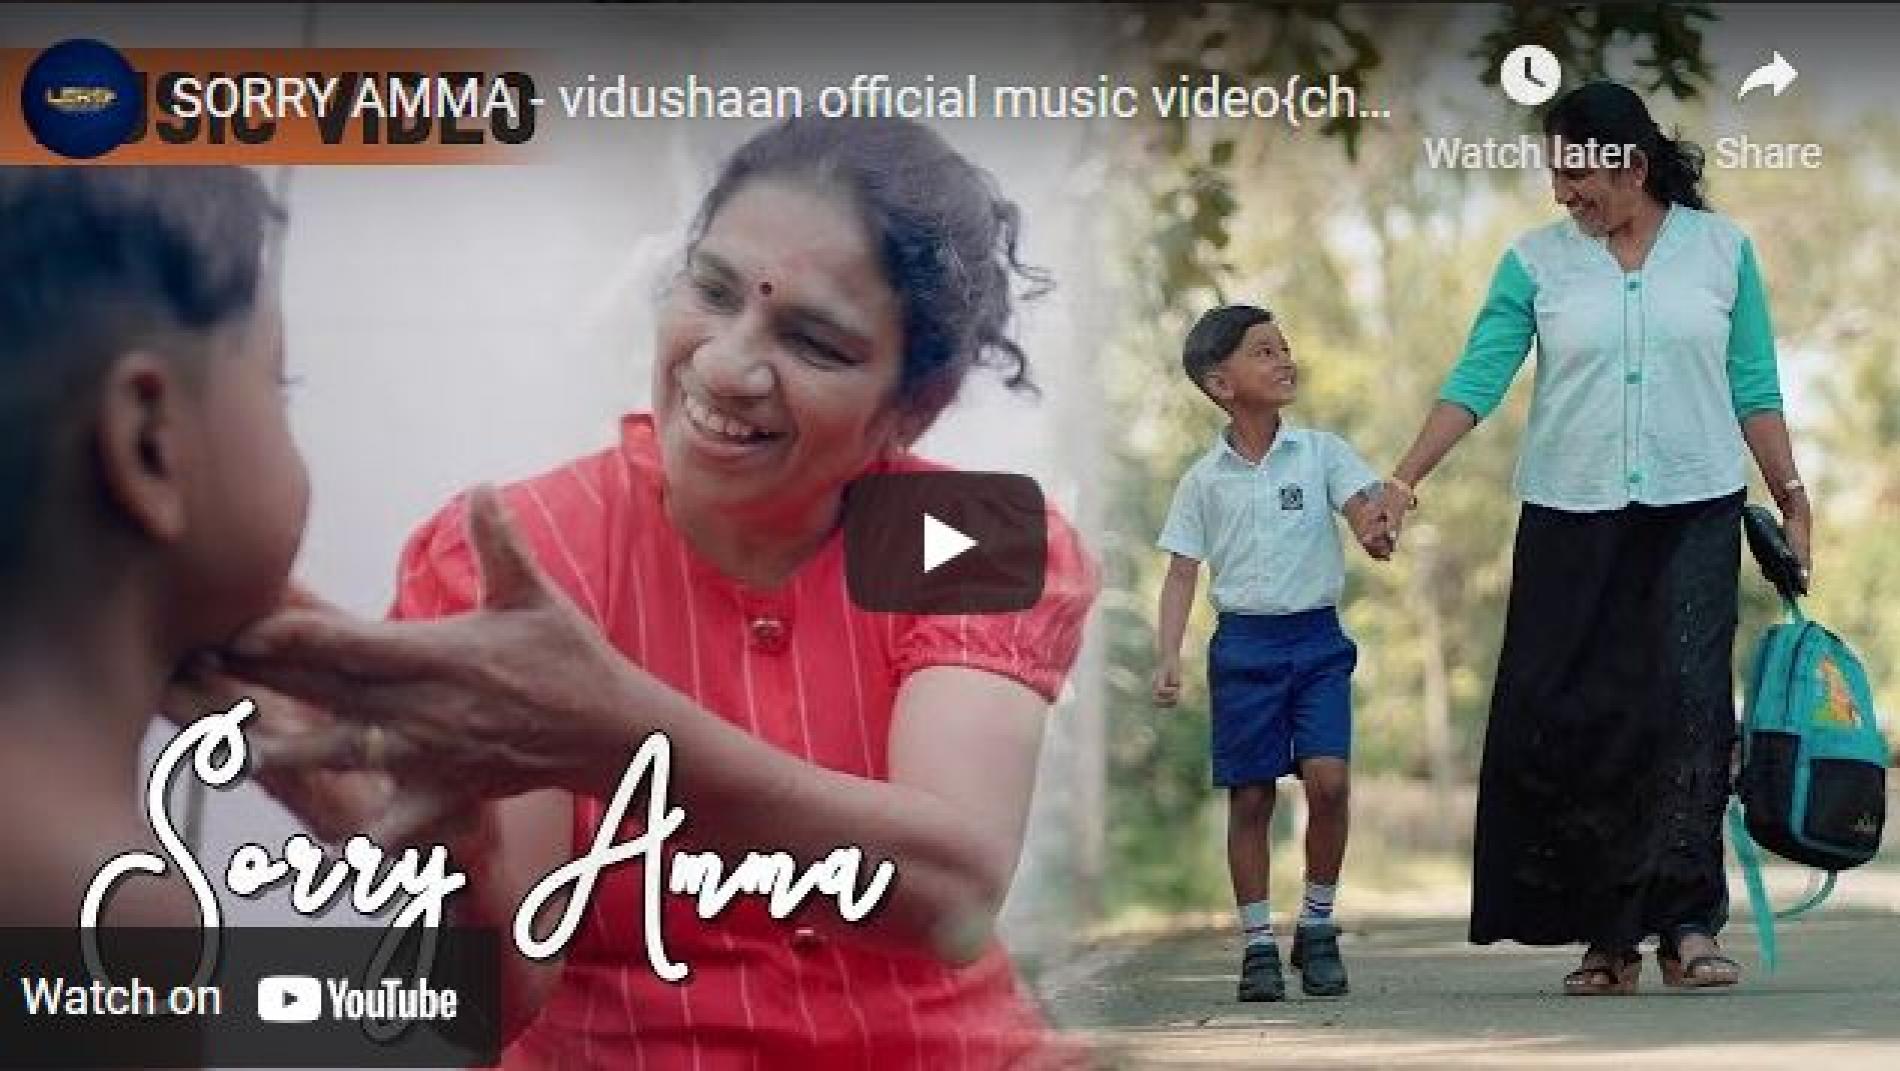 New Music : Sorry Amma – vidushaan official music video{chapter : 1}/ Darryl Duke / Lerociyan TJ / S.N.Vishnujan